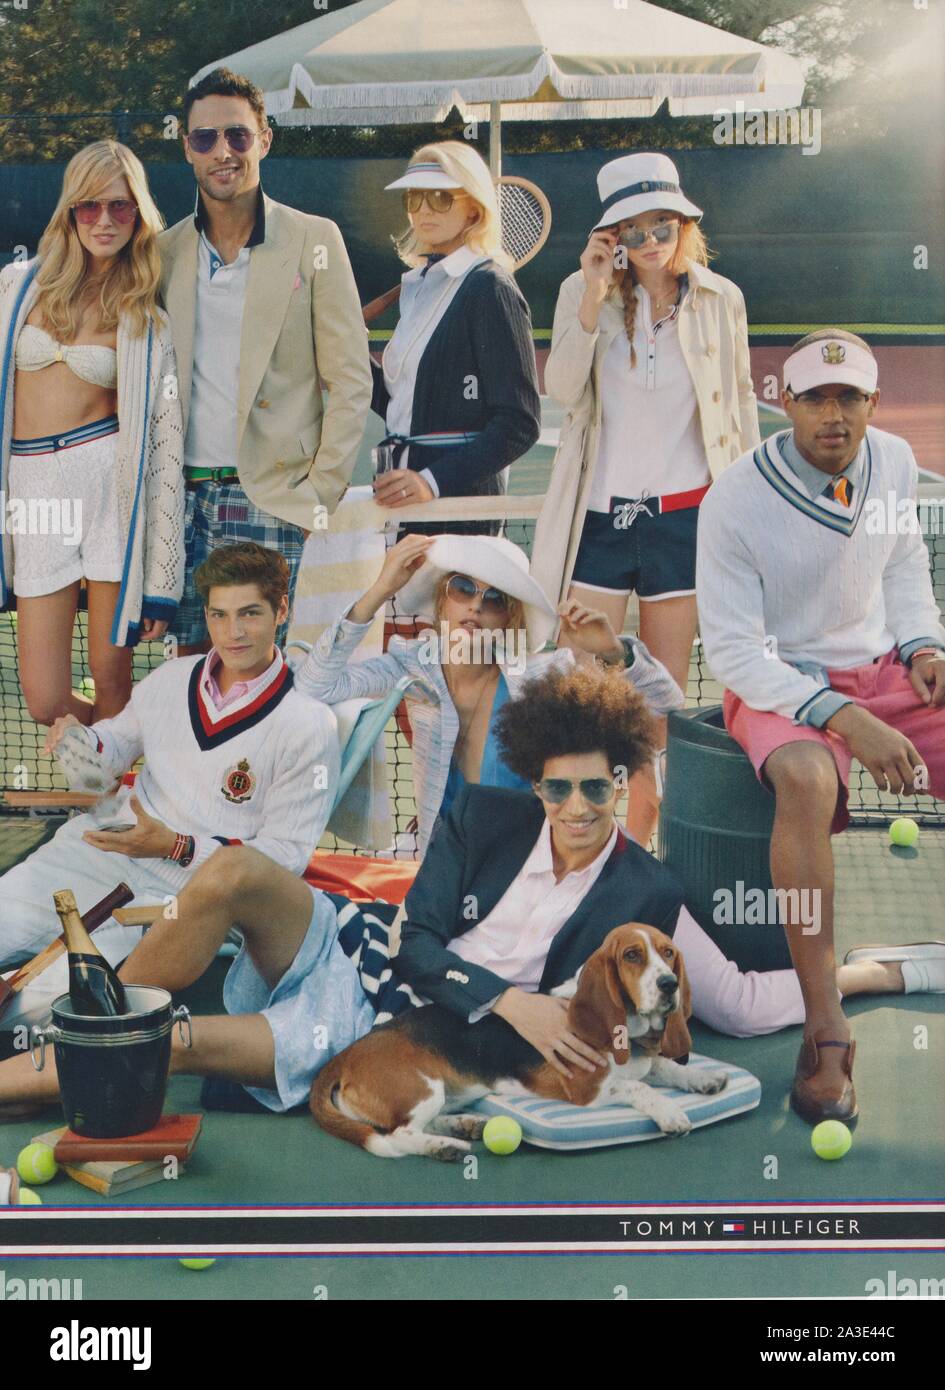 Poster pubblicità Tommy Hilfiger casa di moda in rivista cartacea da 2011  anni, pubblicità, pubblicità creativa Tommy Hilfiger 2010s pubblicità Foto  stock - Alamy